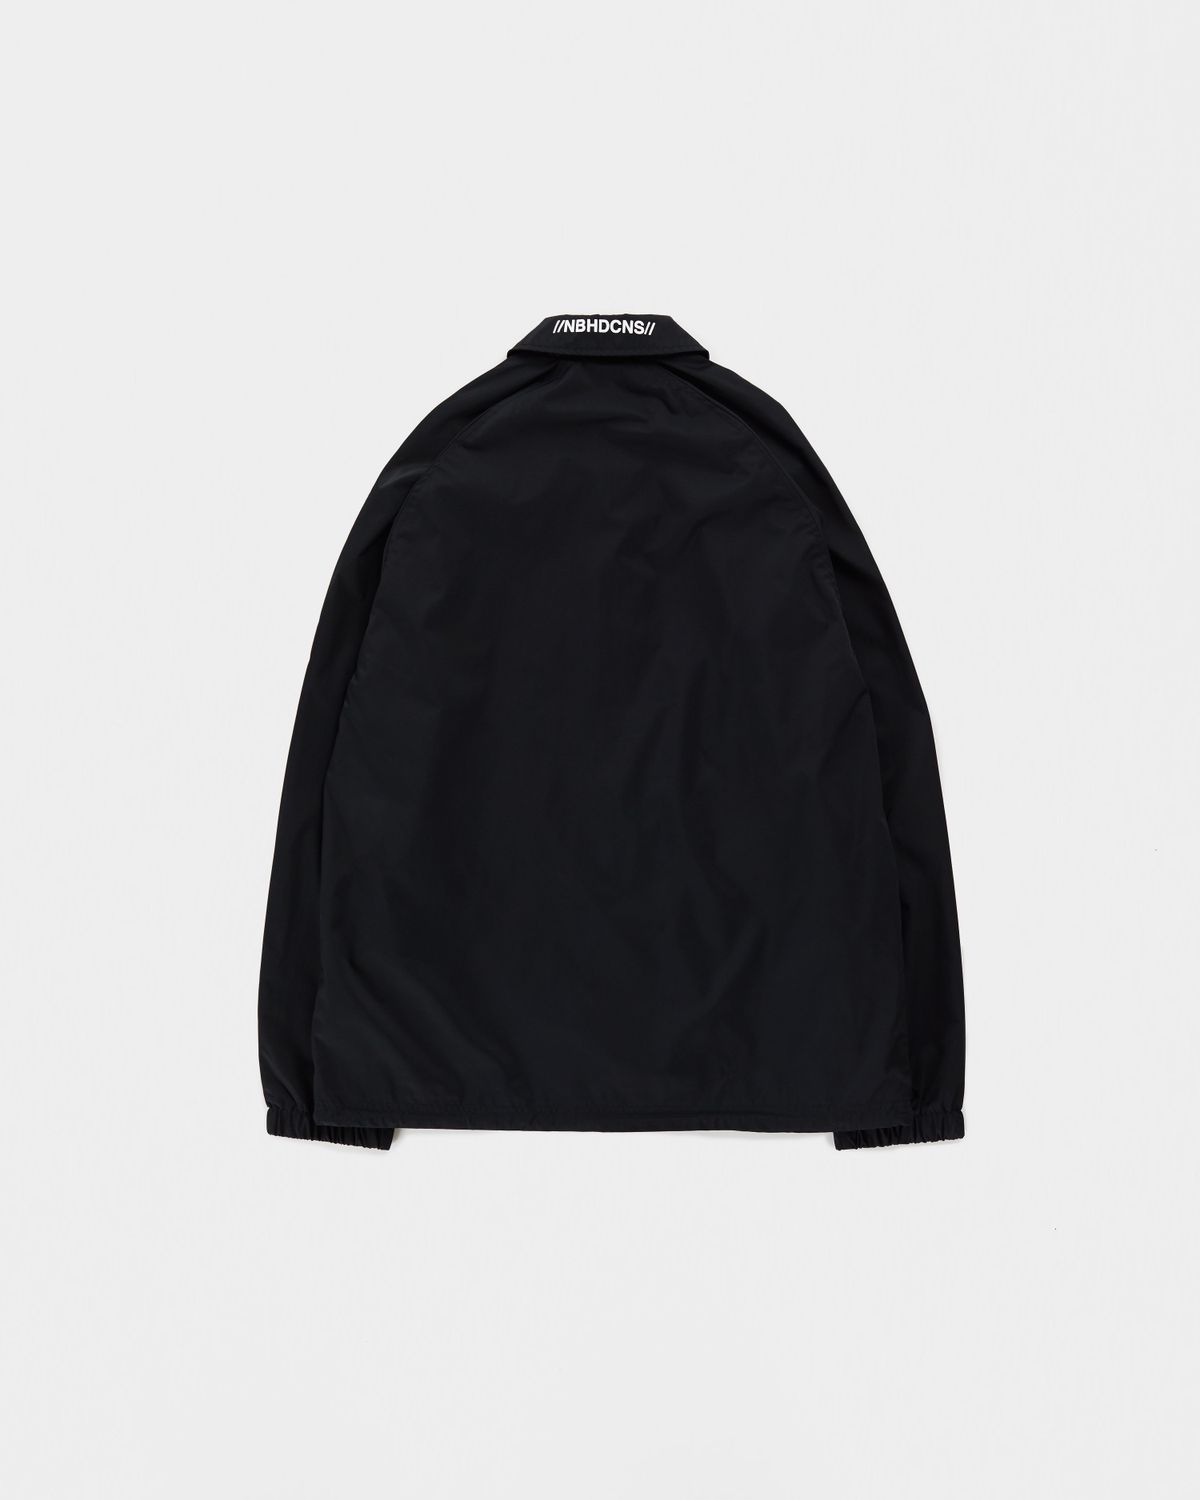 Converse x NBHD – Black Coaches Jacket - Jackets - Black - Image 2